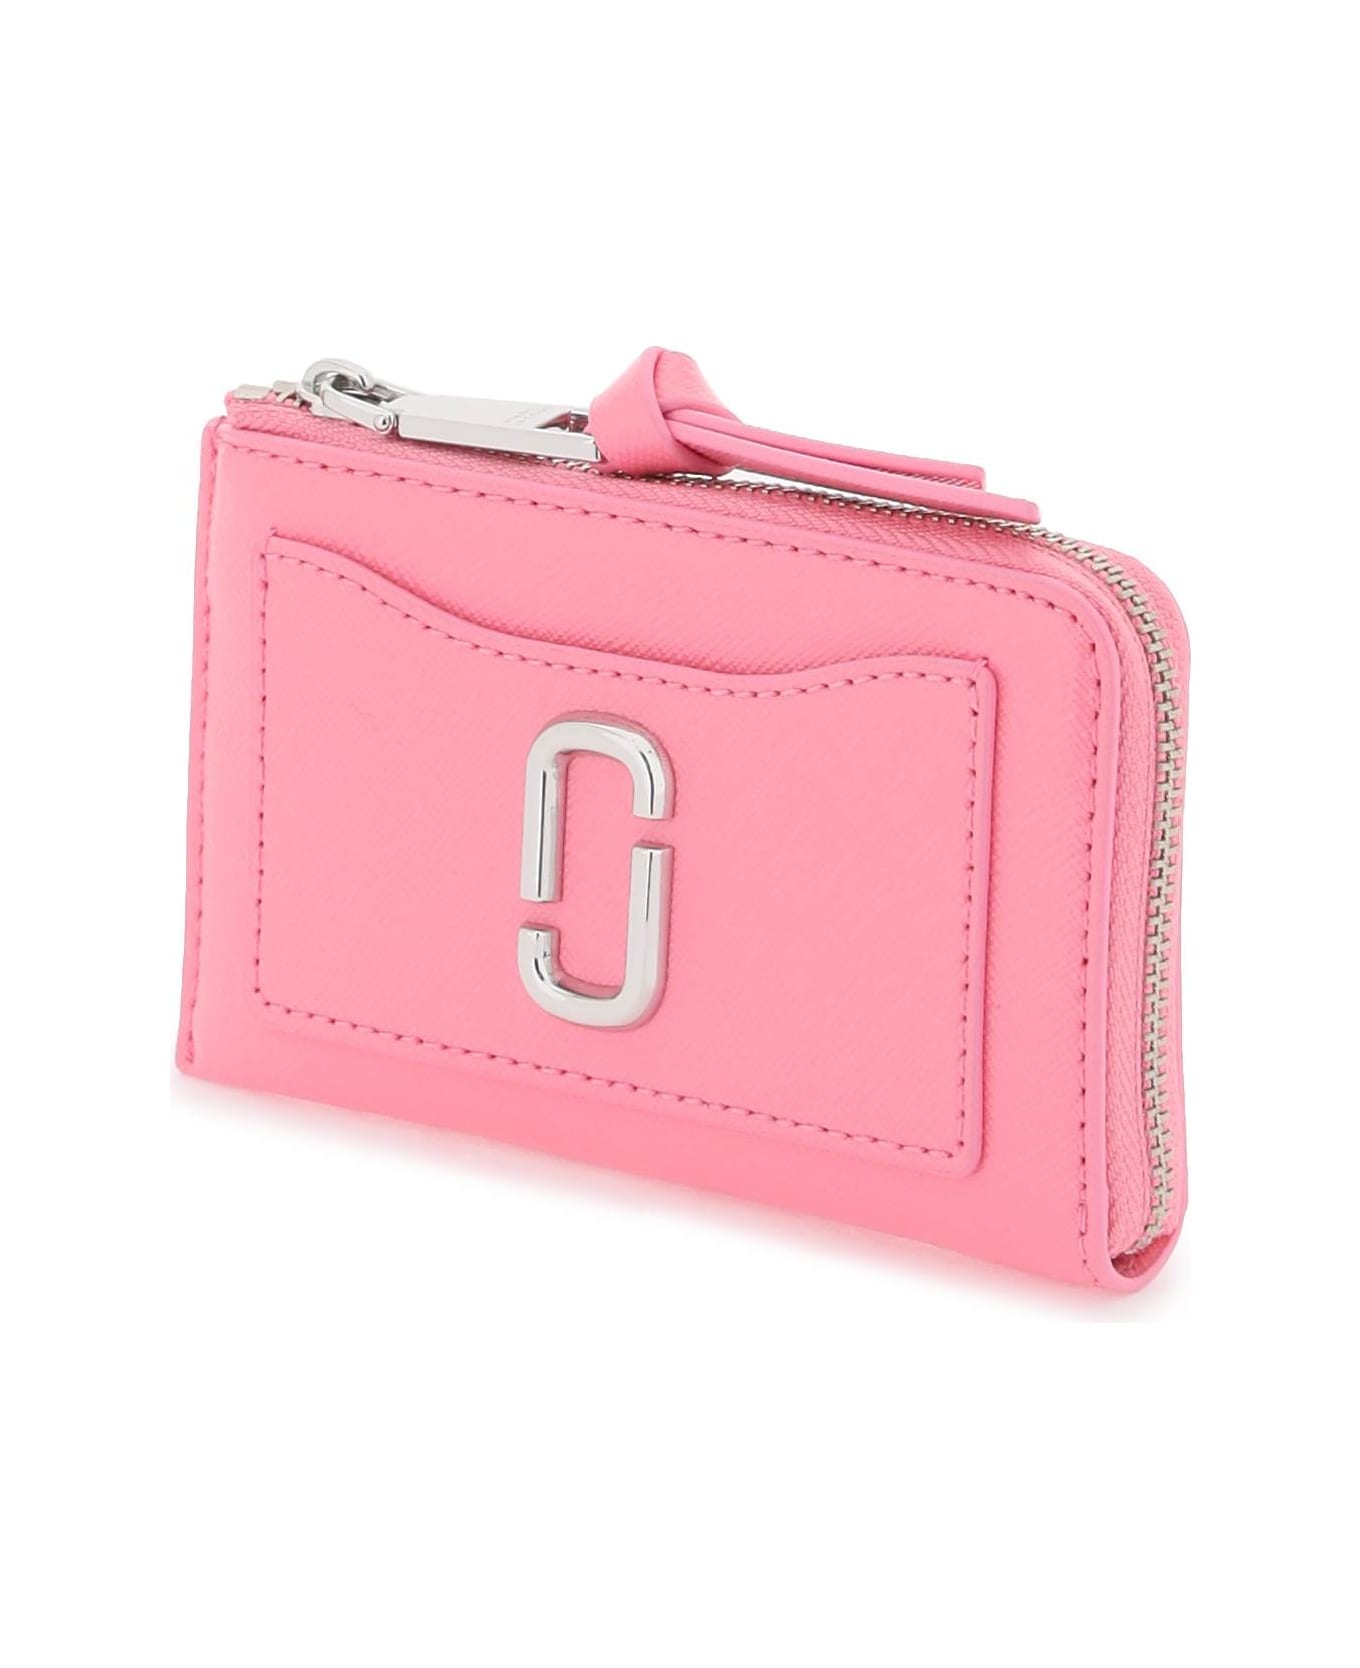 Marc Jacobs The Utility Snapshot Top Zip Multi Wallet - PETAL PINK (Pink) 財布